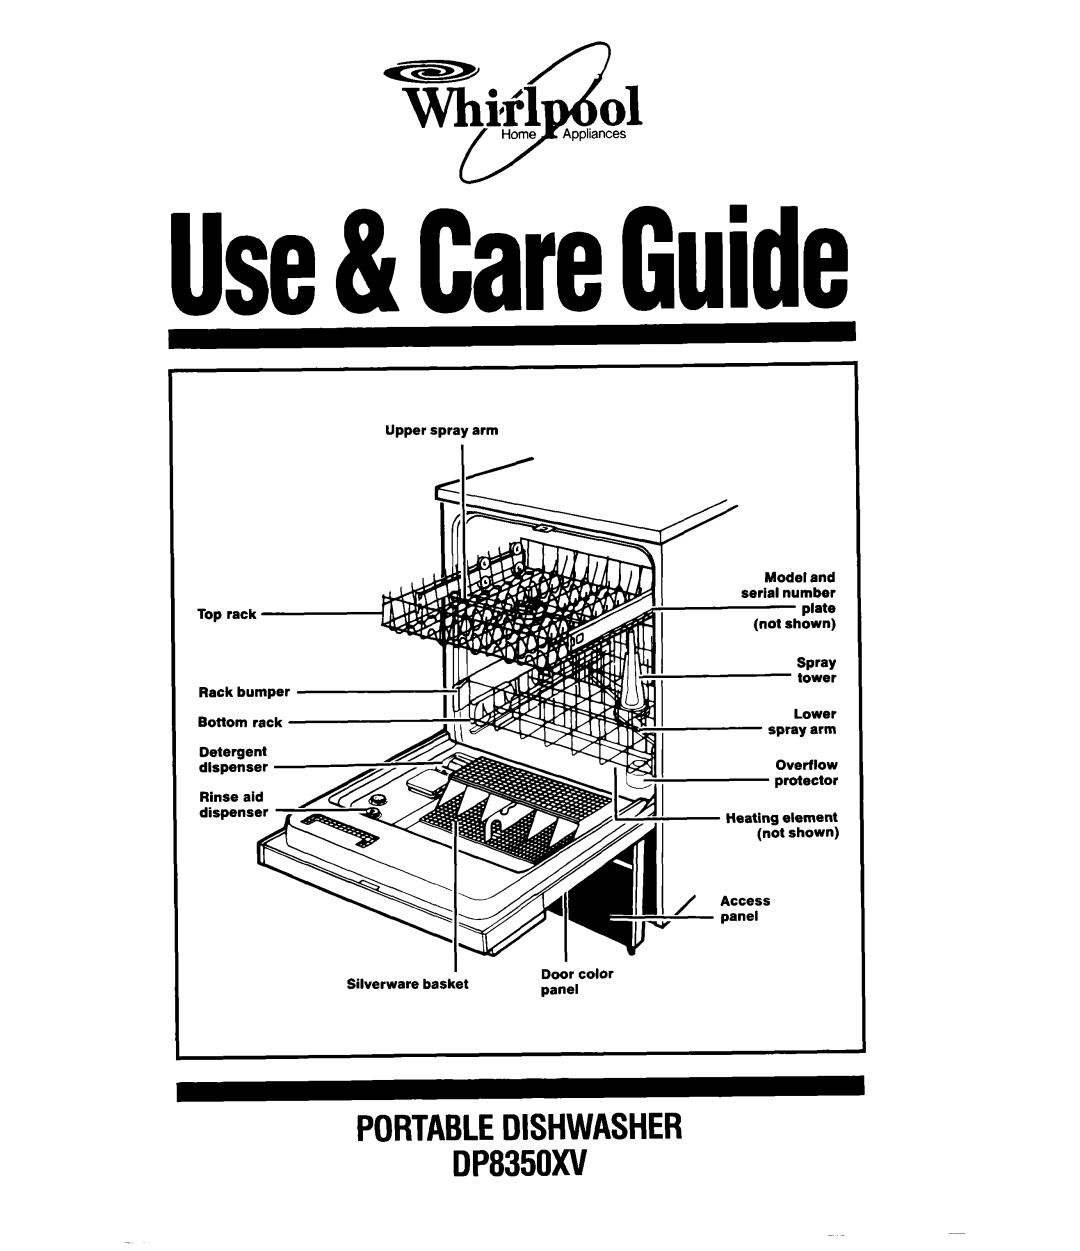 Whirlpool manual Use&CareGuide, T&f1, PORTABLEDISHWASHER DP8350XV, basket 